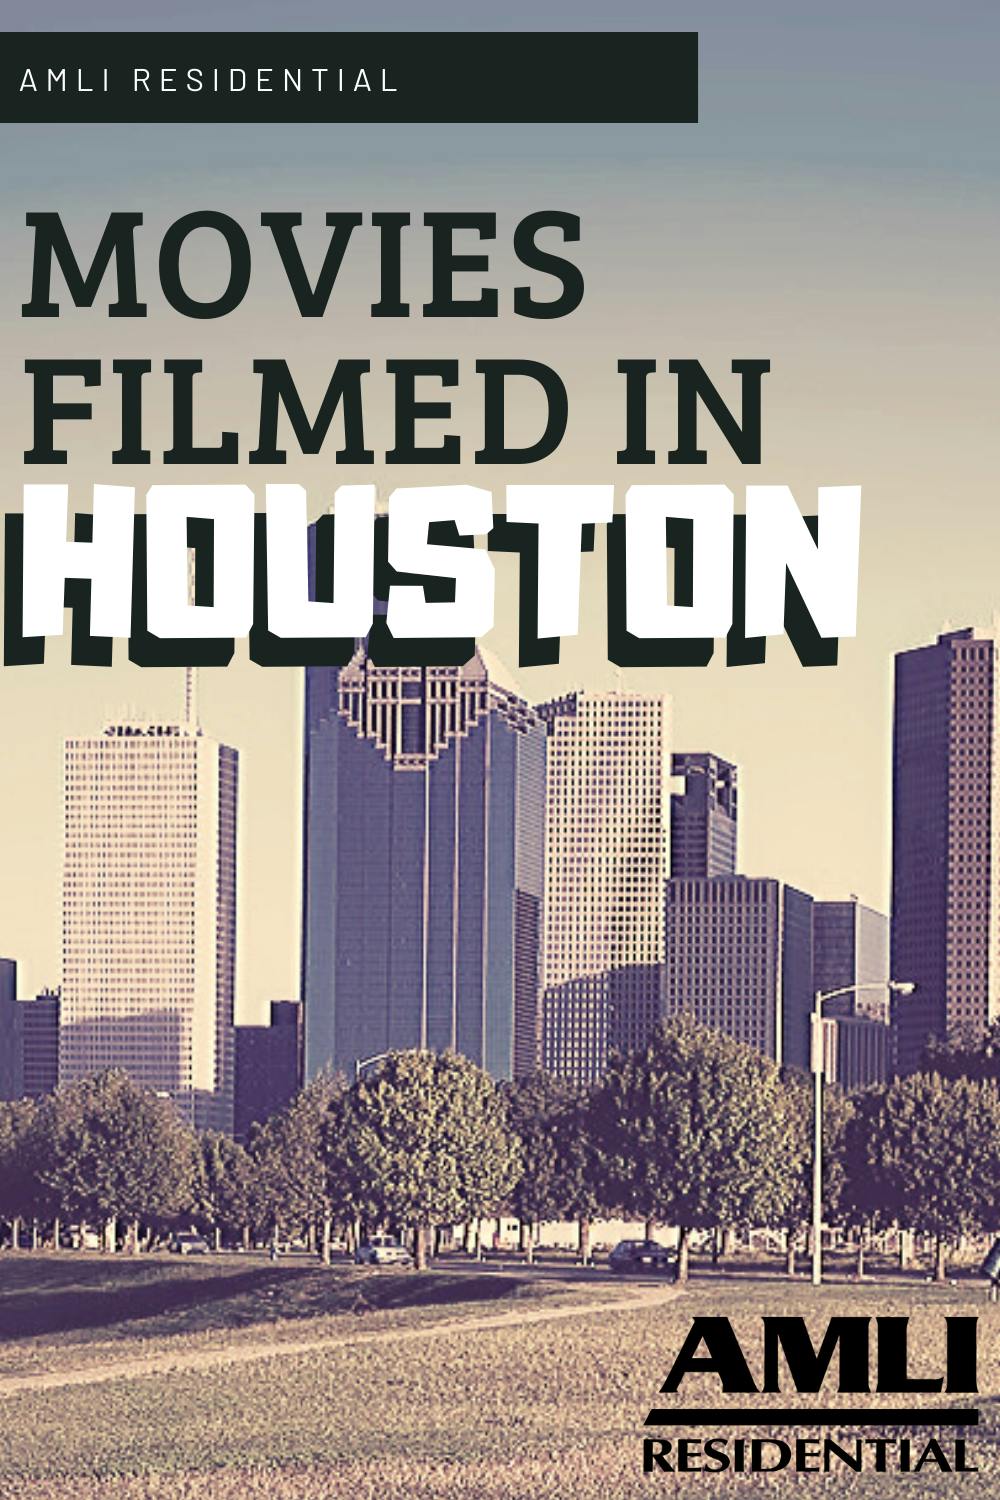 "Movies filmed in Houston pinterest graphic"